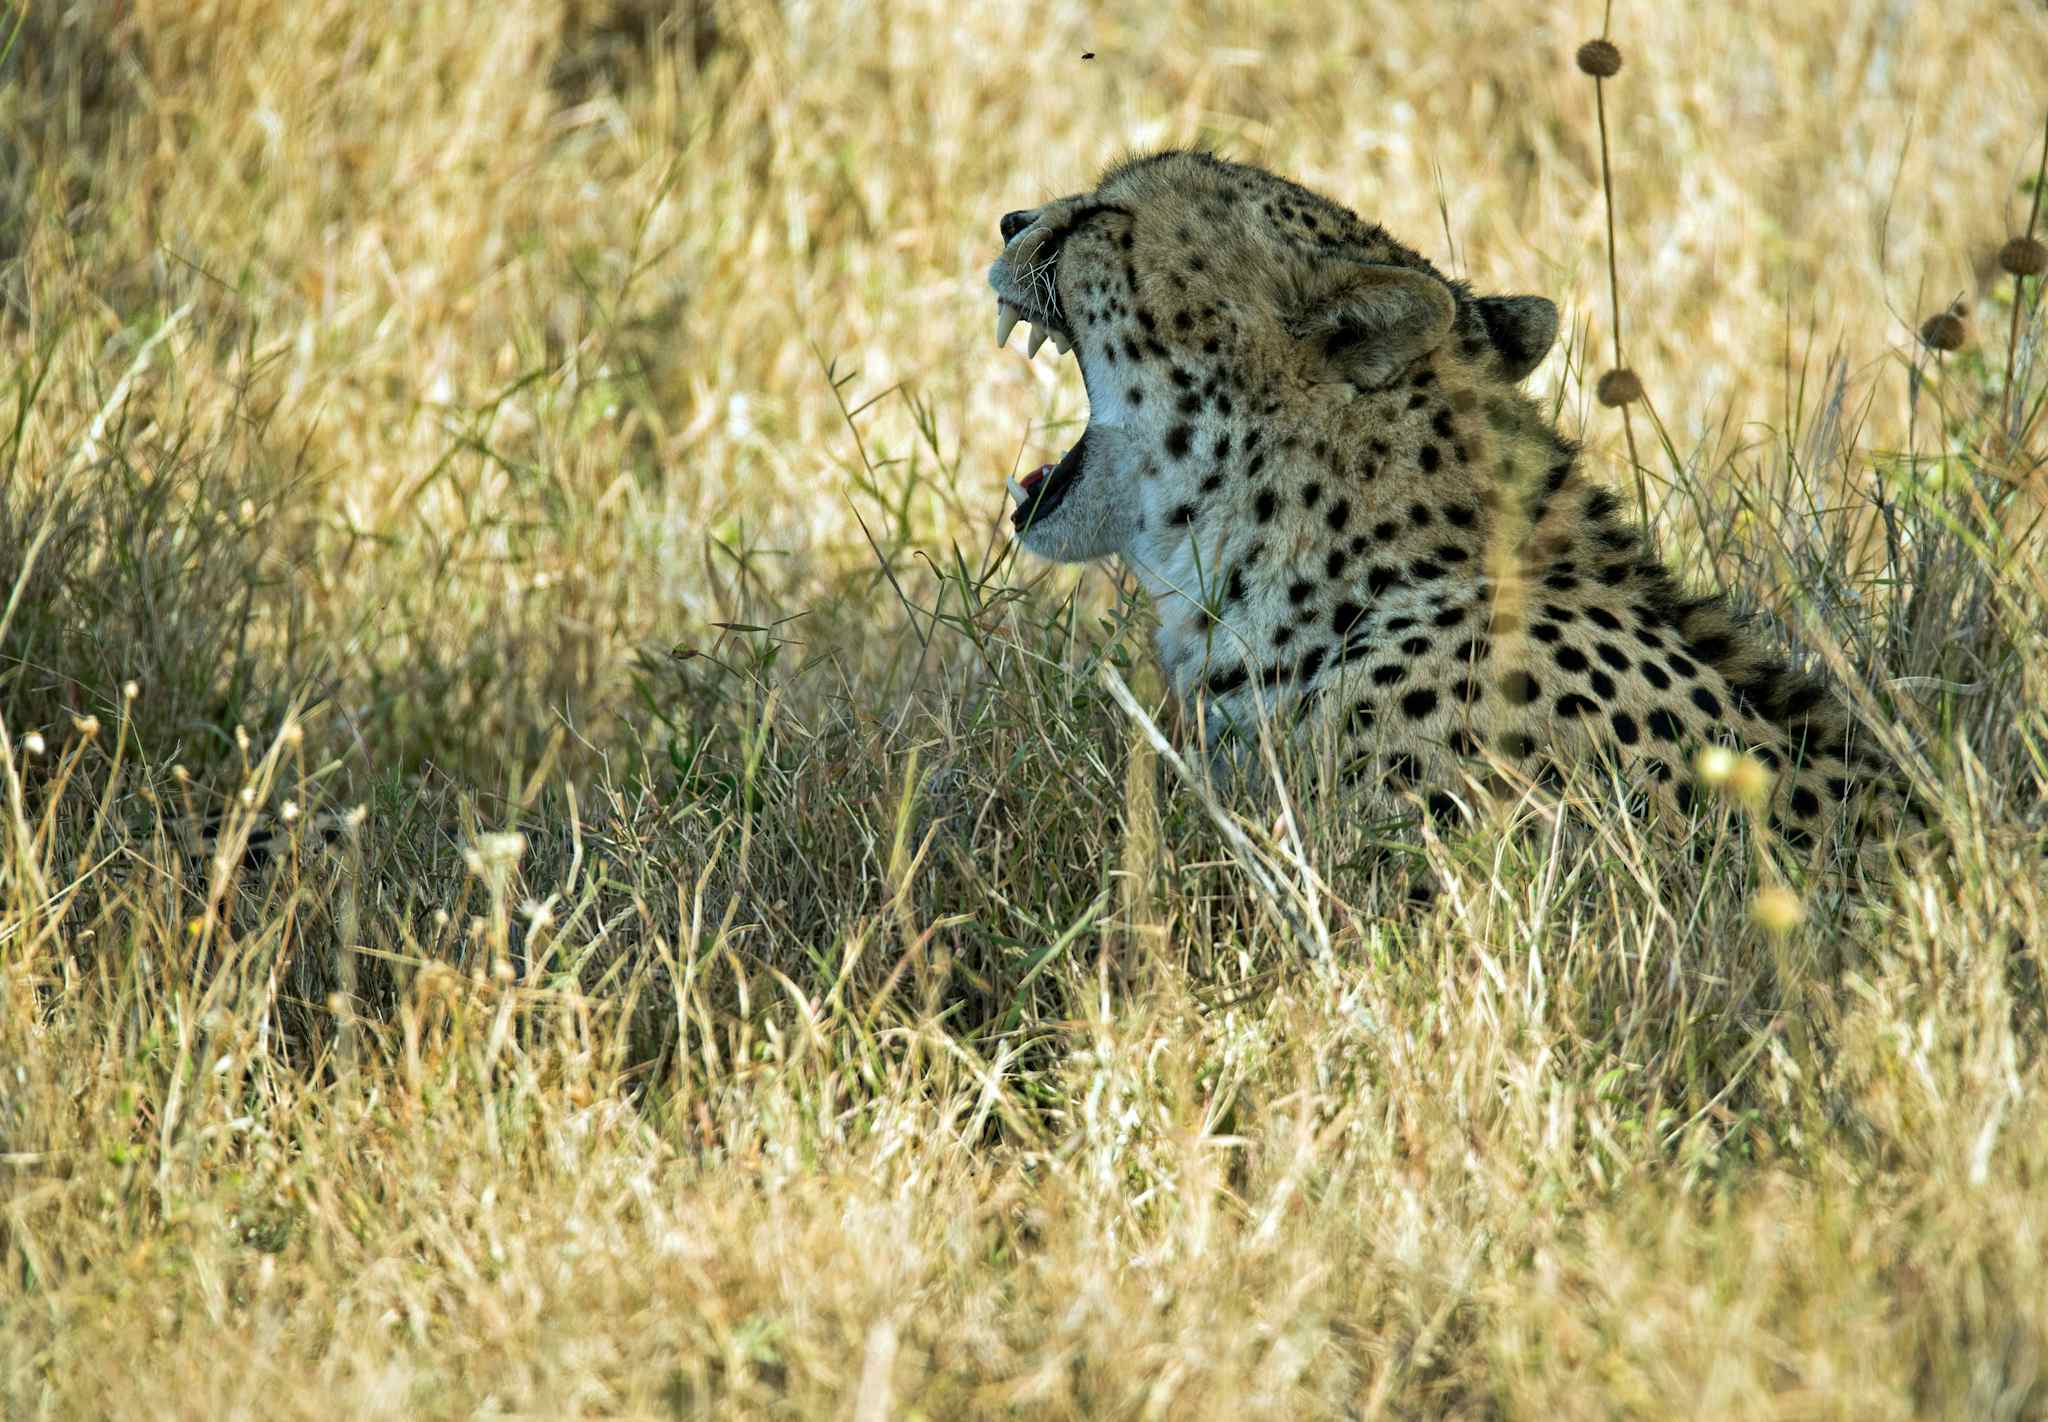 Yawning cheetah. A cheetah yawns and displays its teeth. Ol Pejeta conservancy, Kenya.

